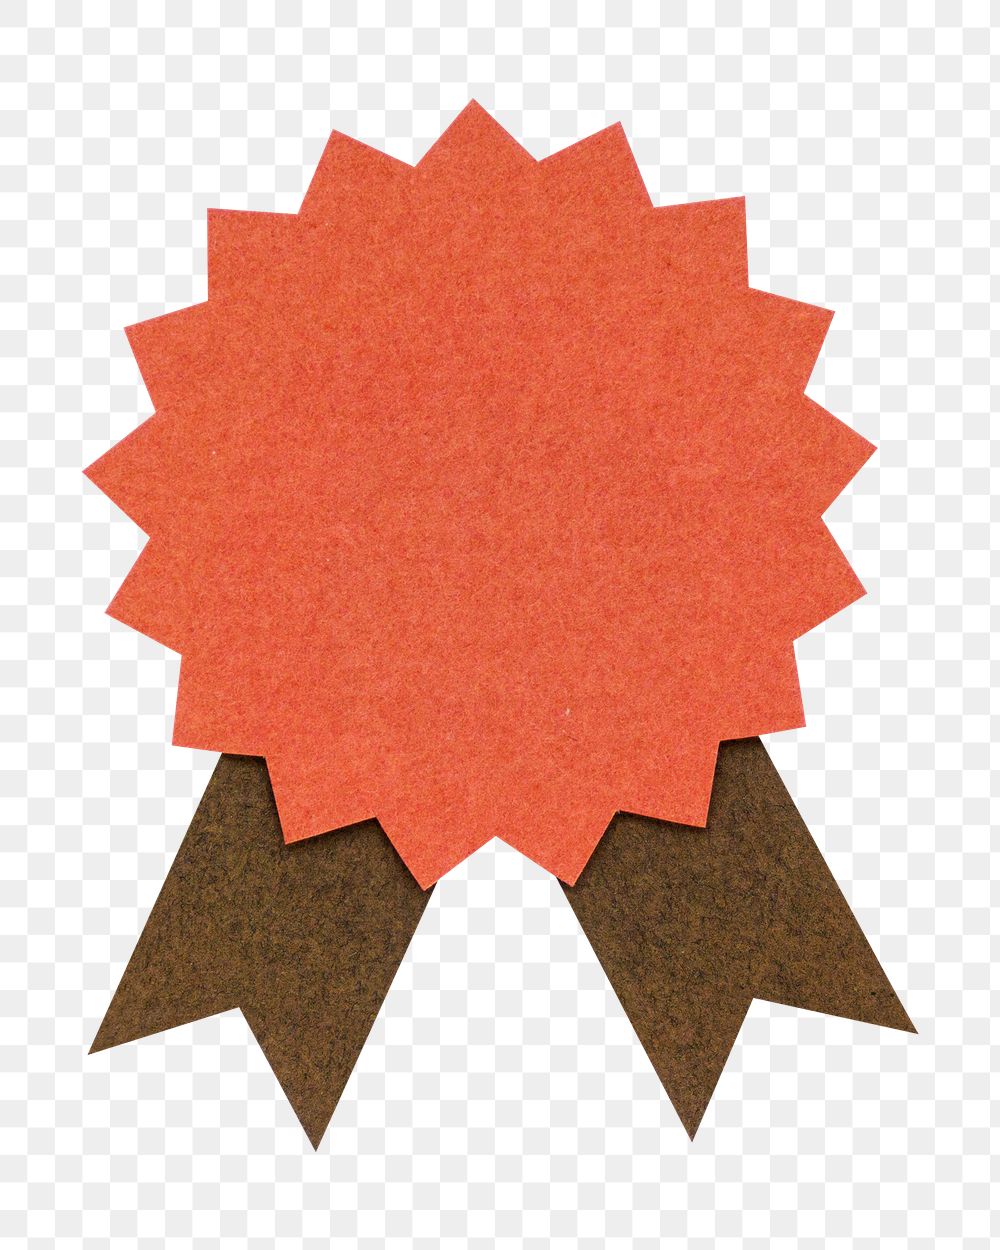 Orange prize badge paper craft design element